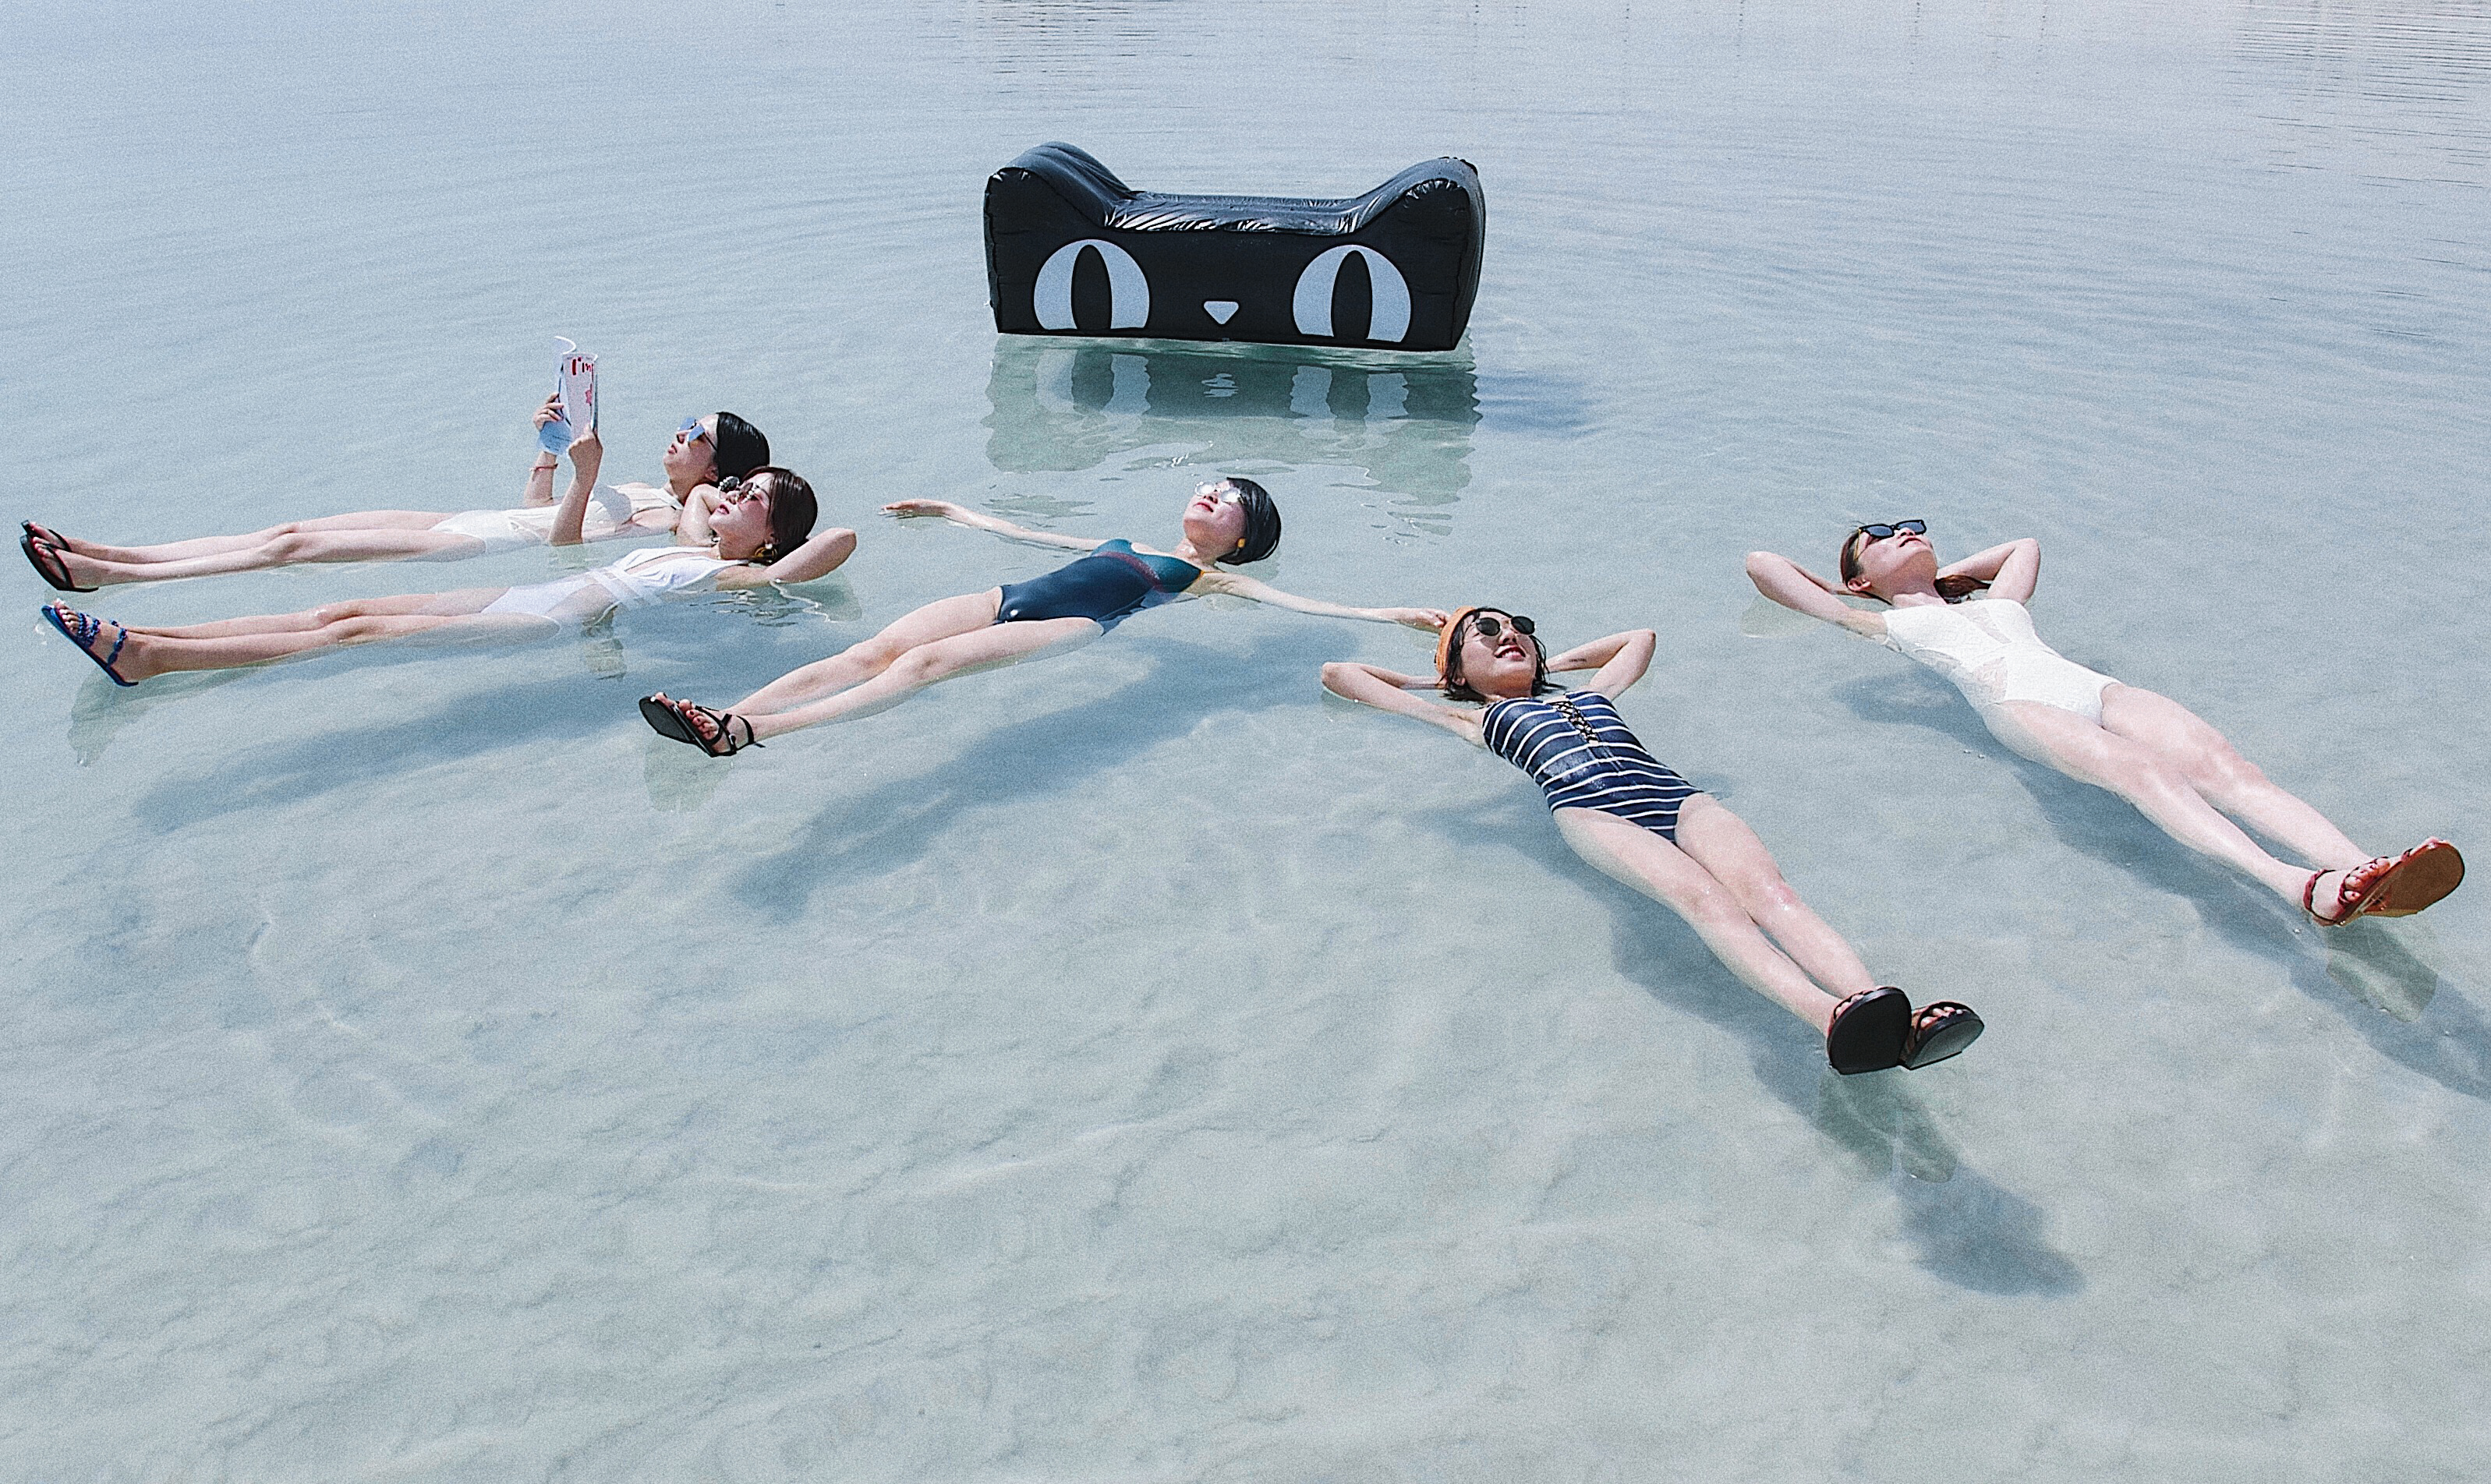 Tmall shoppers floating on Dead Sea